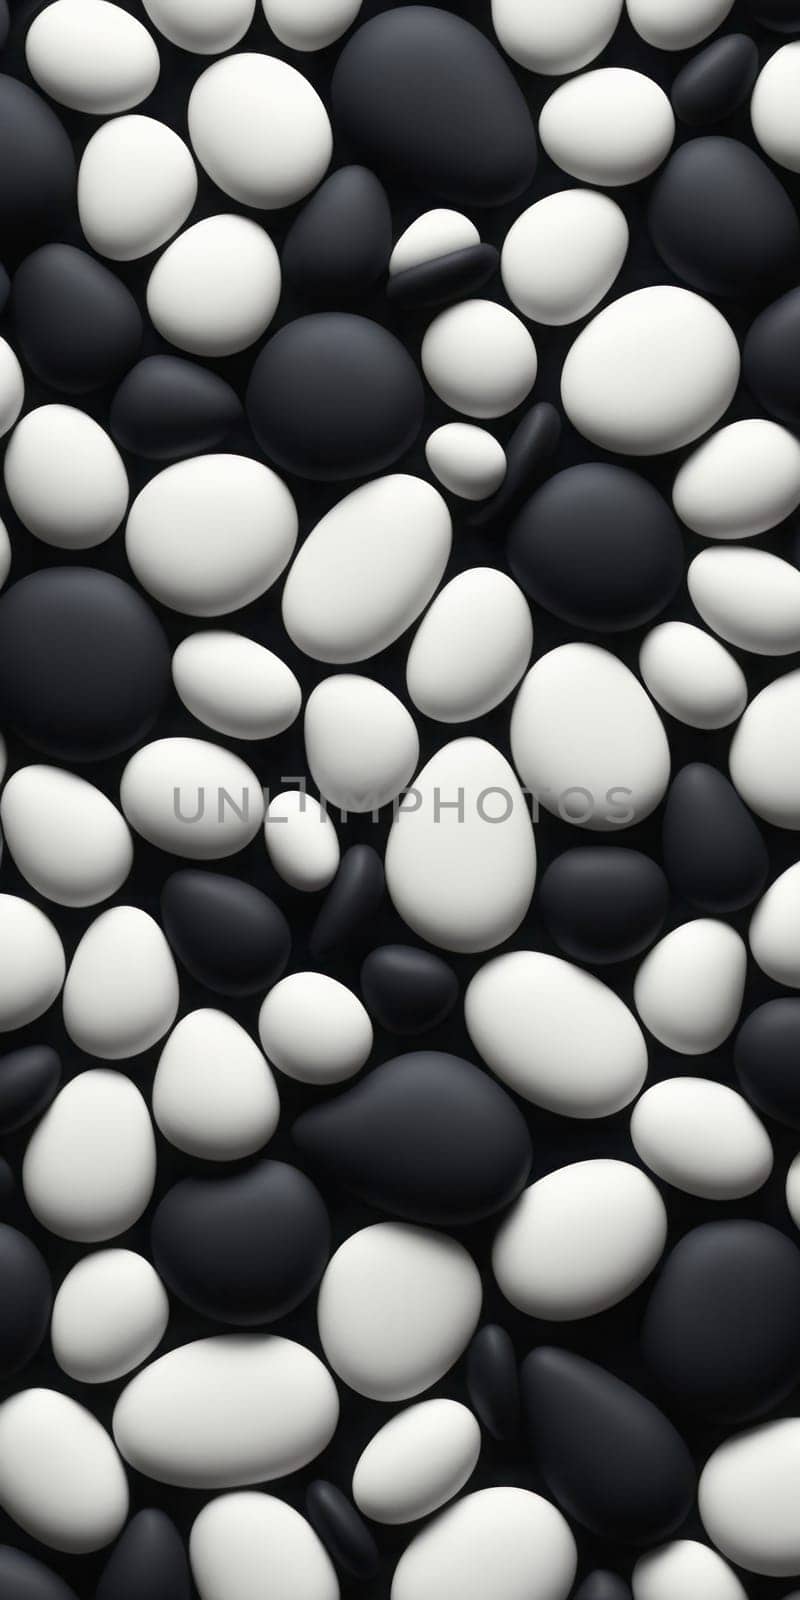 Pebbled Shapes in Black Whitesmoke by nkotlyar